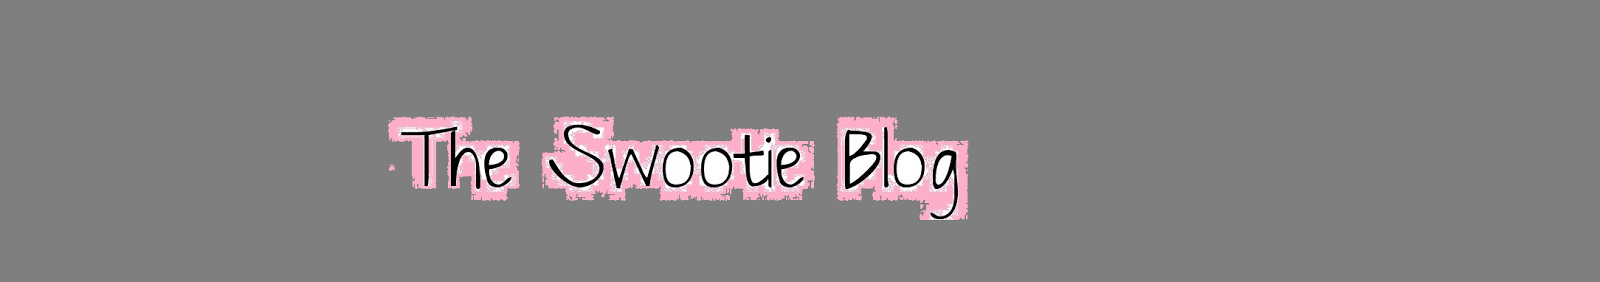 The Swootie Blog